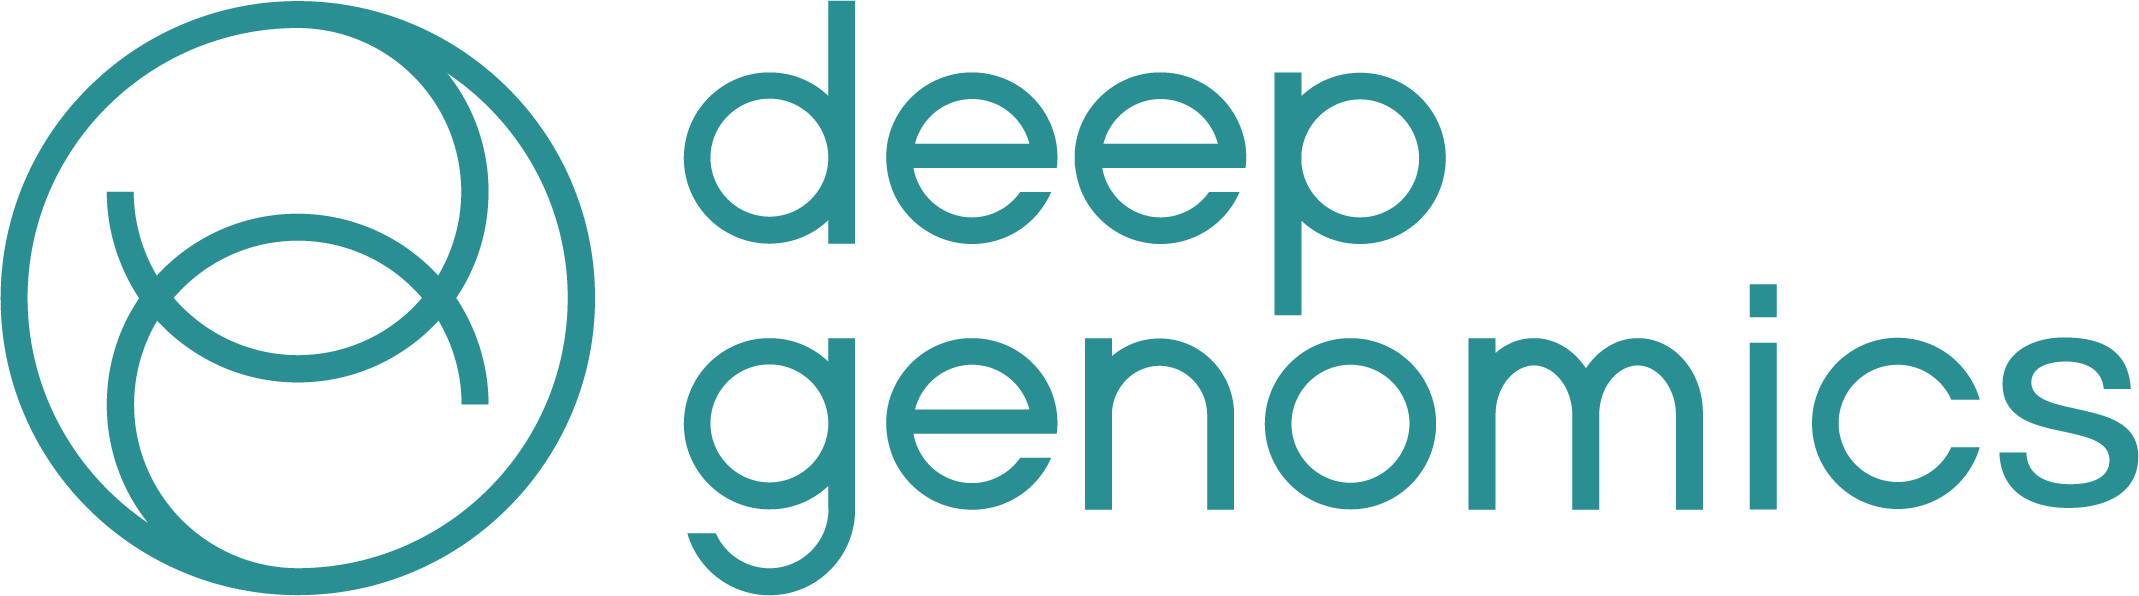 Vision Fund investment portfolio company Deep Genomics's logo